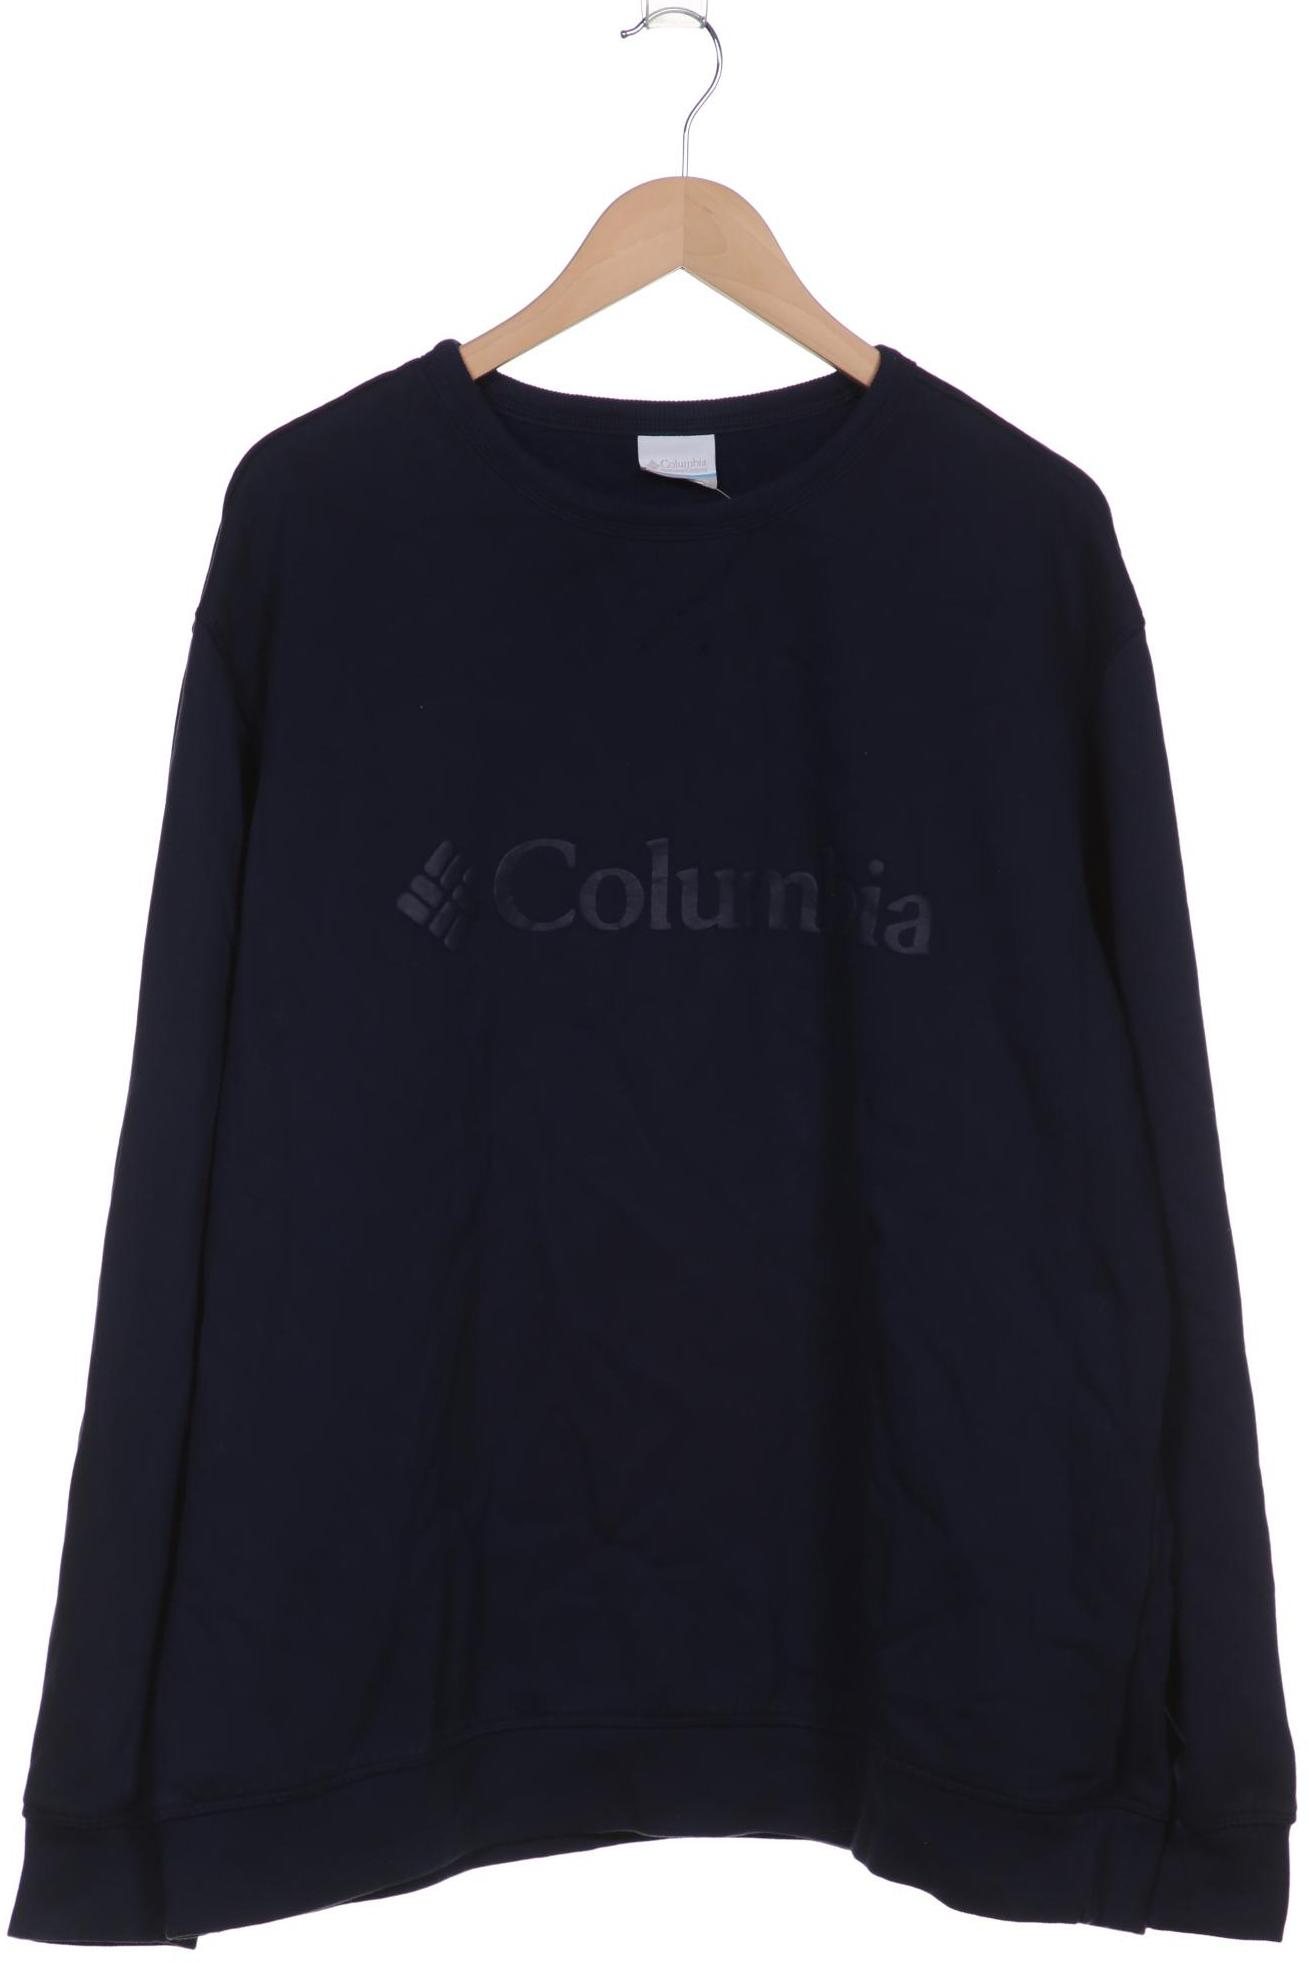 Columbia Herren Sweatshirt, marineblau von Columbia